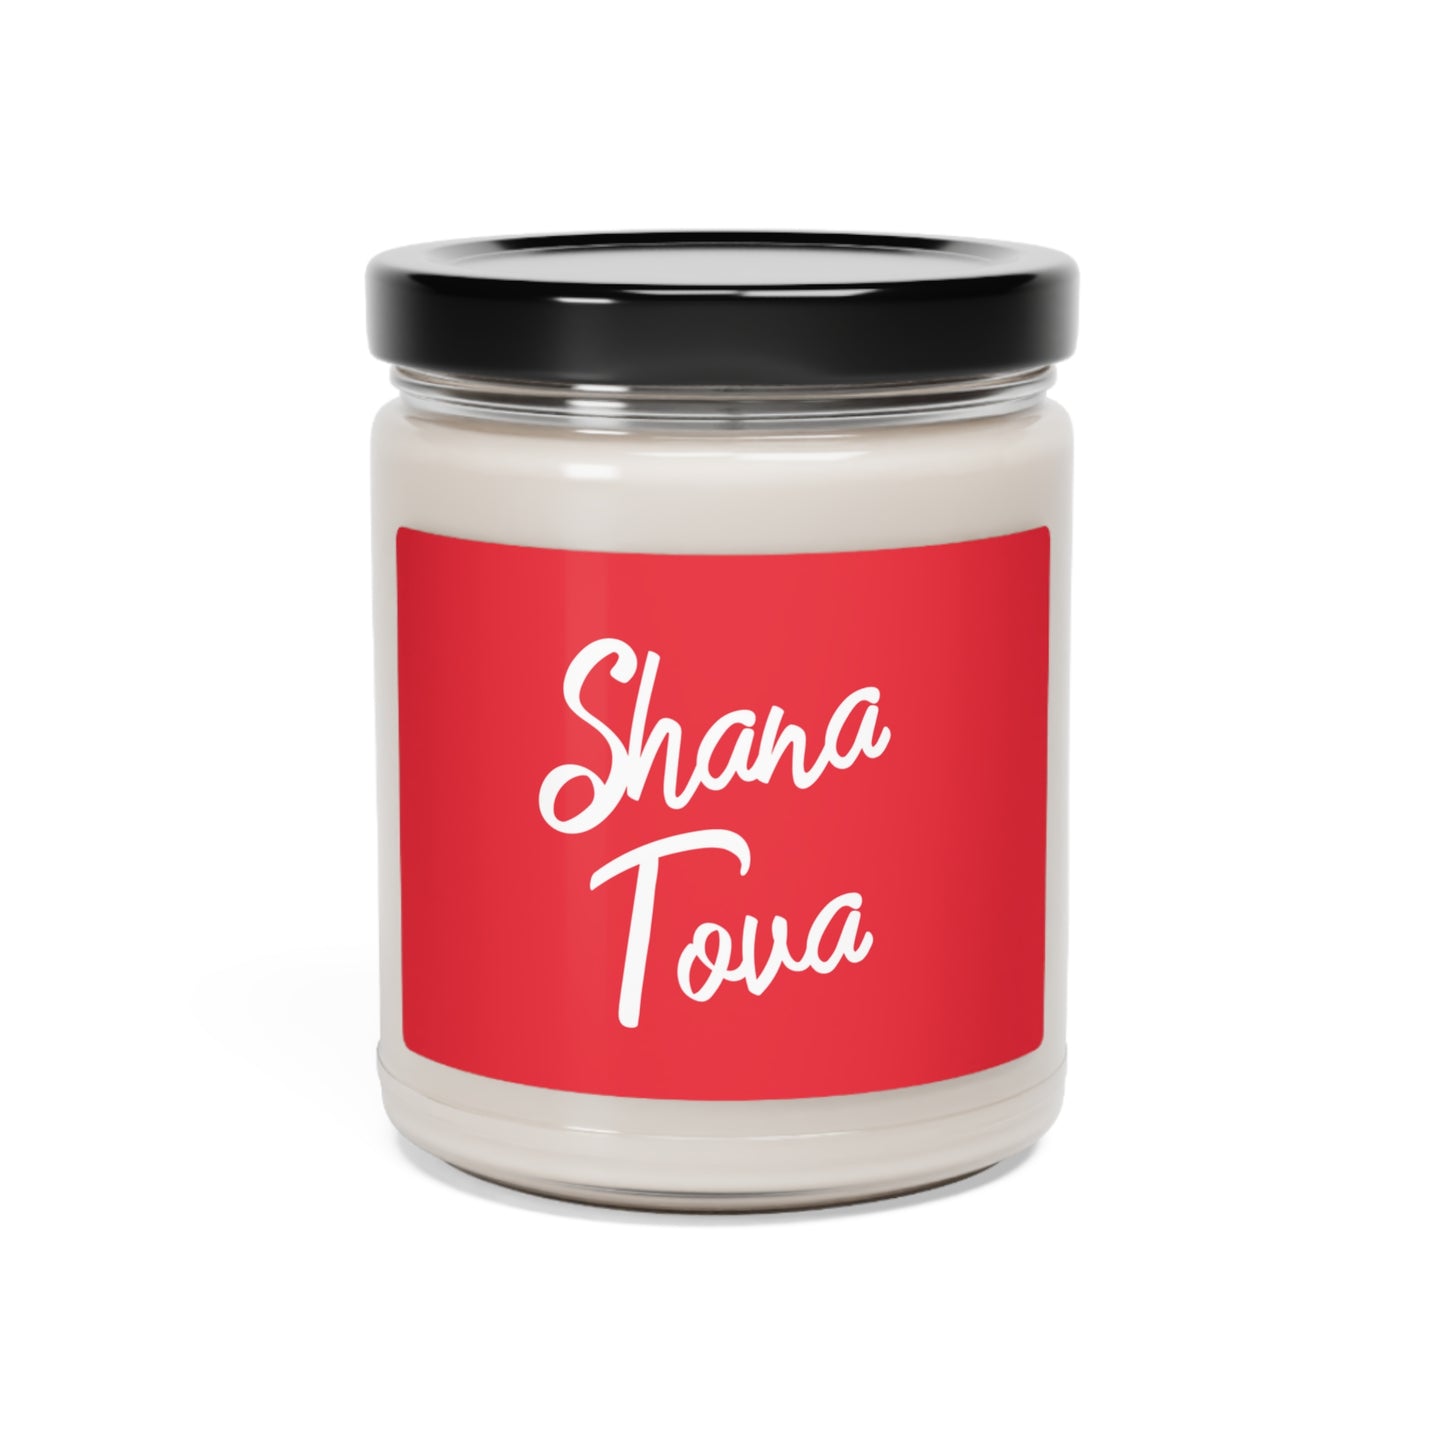 Shana Tova Candle